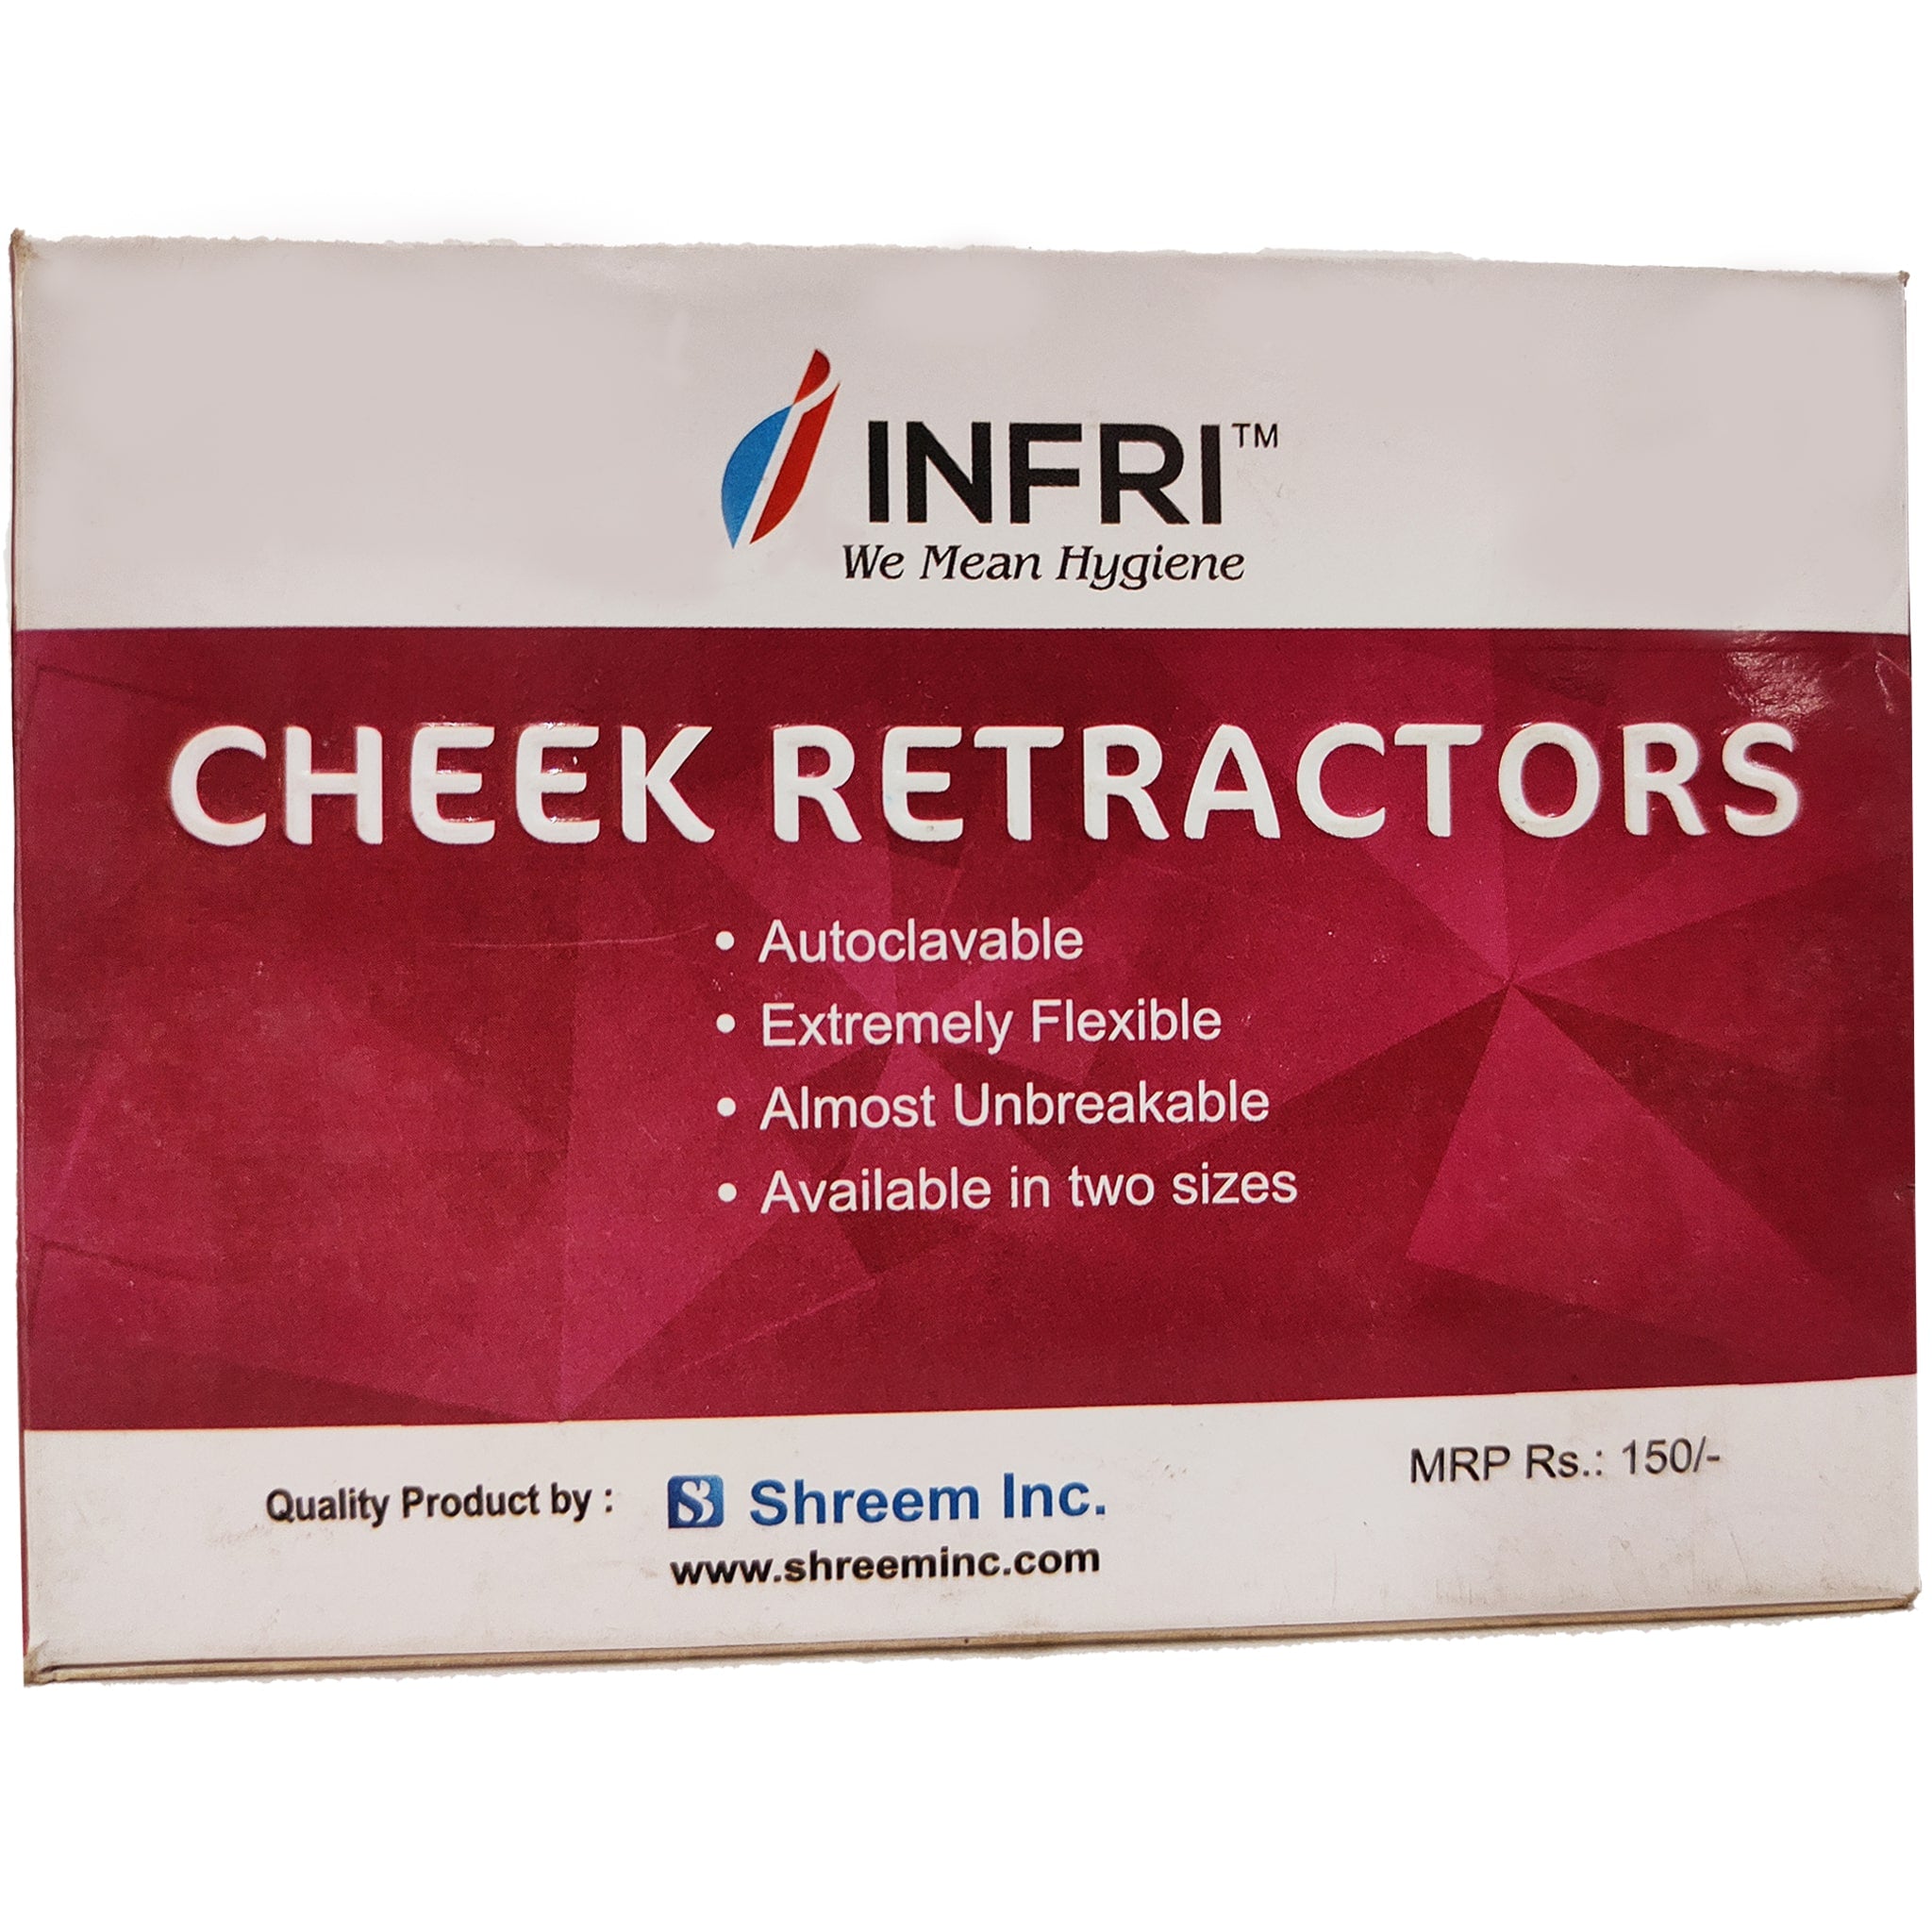 Infri Cheek Retractors